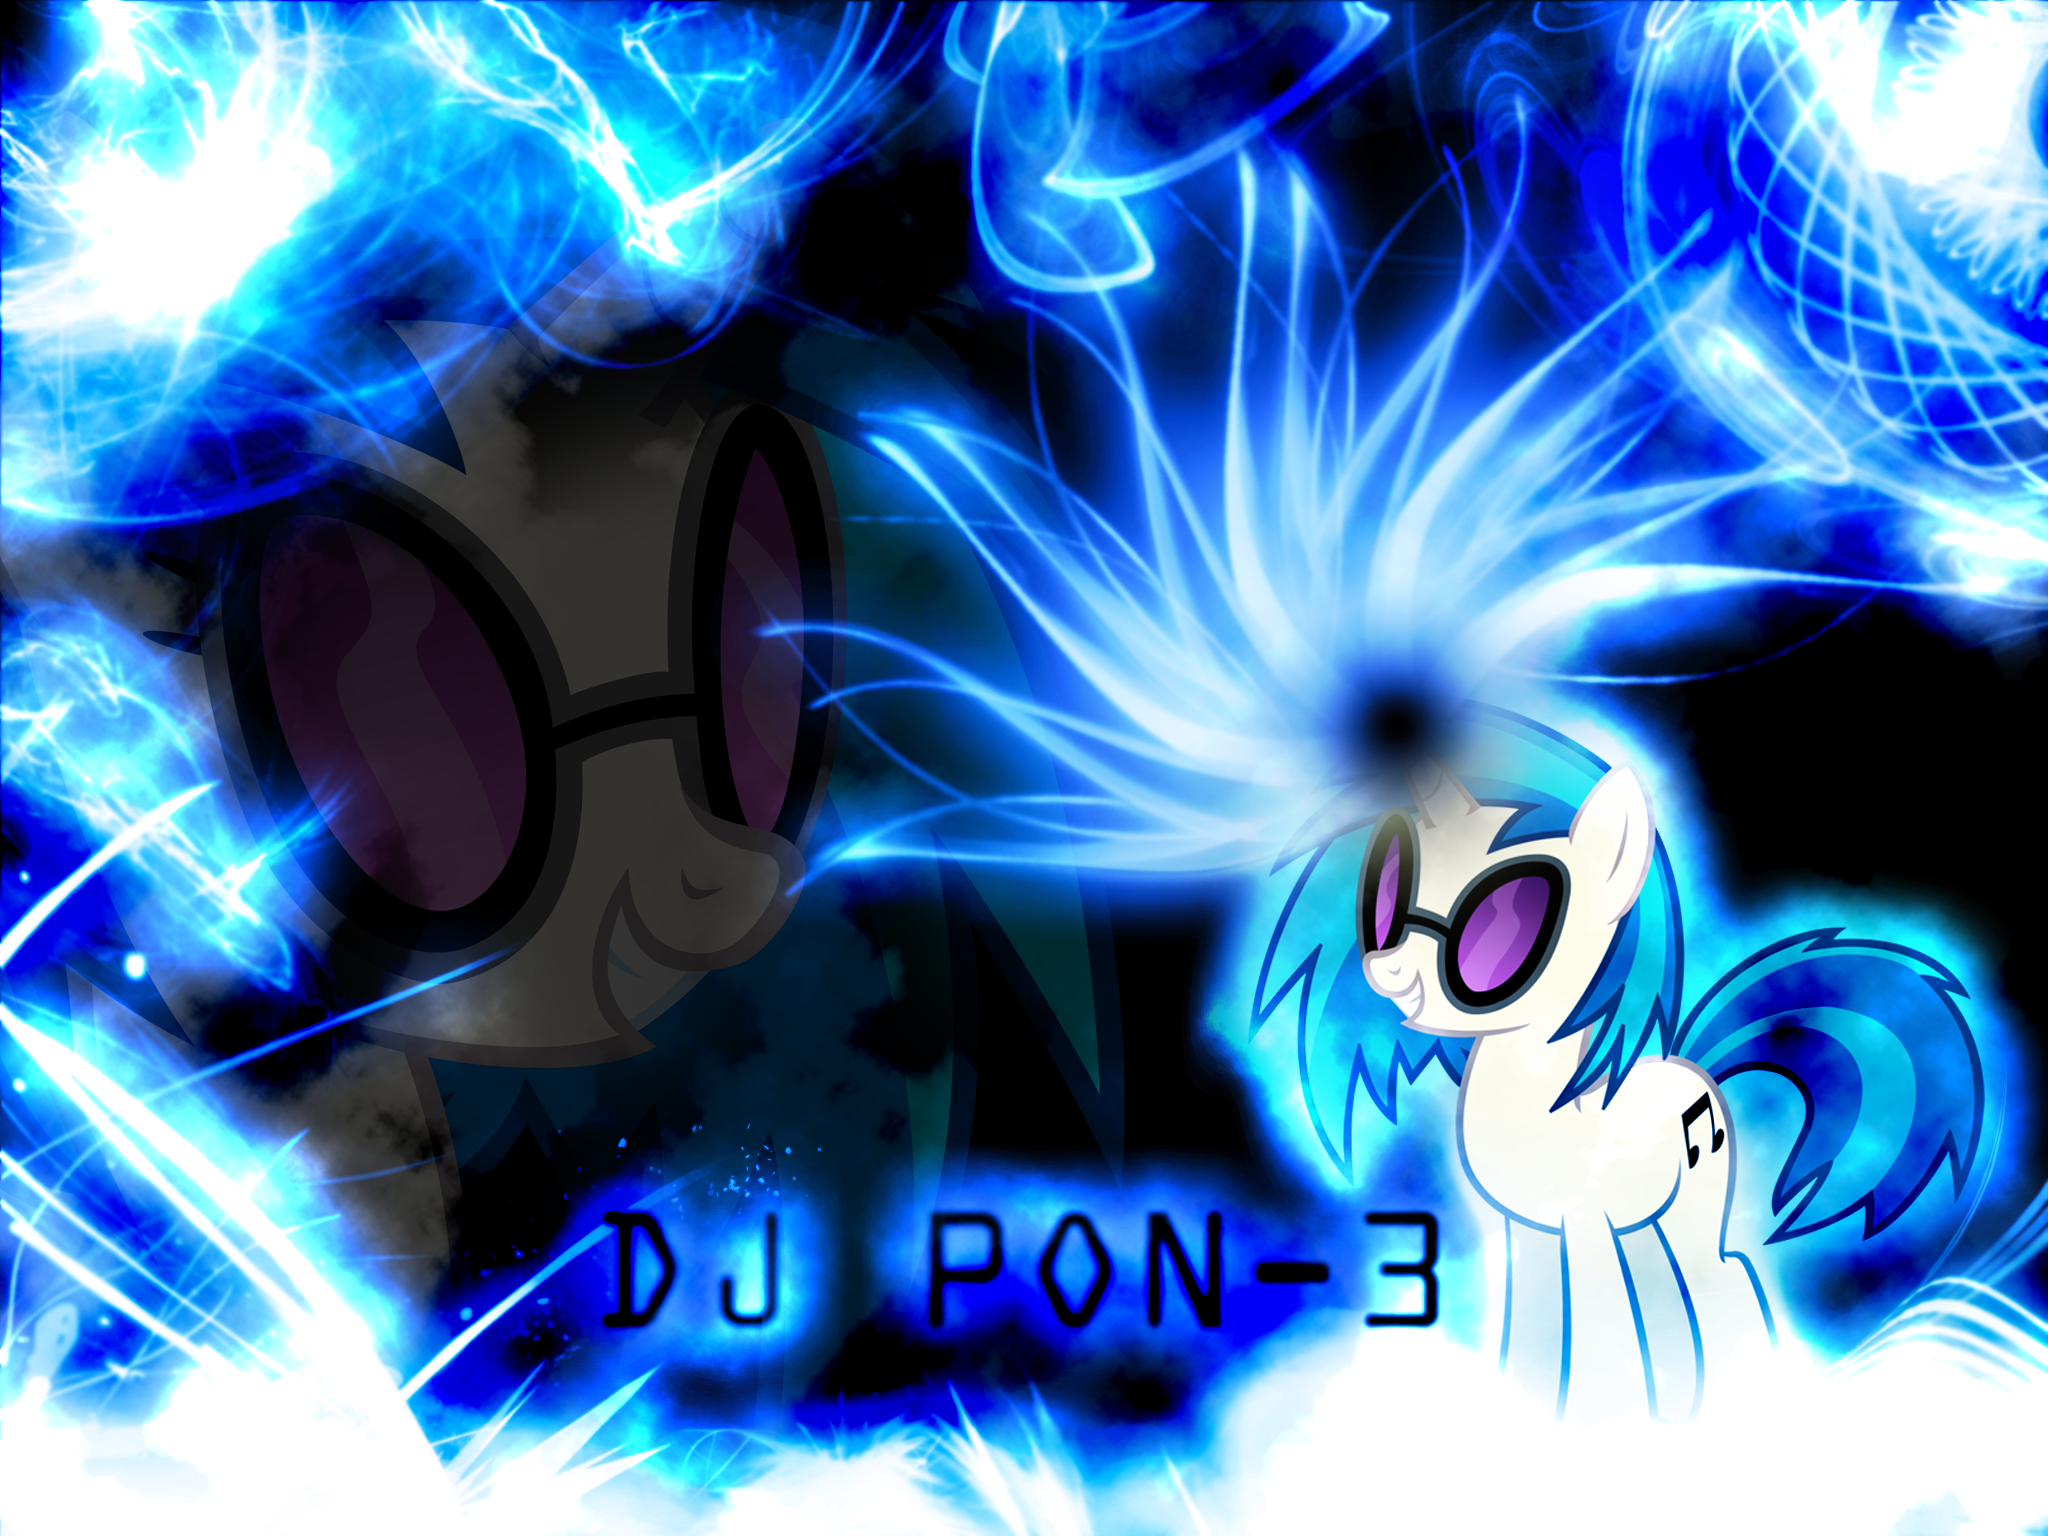 DJ PON-3 I-Pad Wallpaper 2048x1536 by Arakareeis on DeviantArt